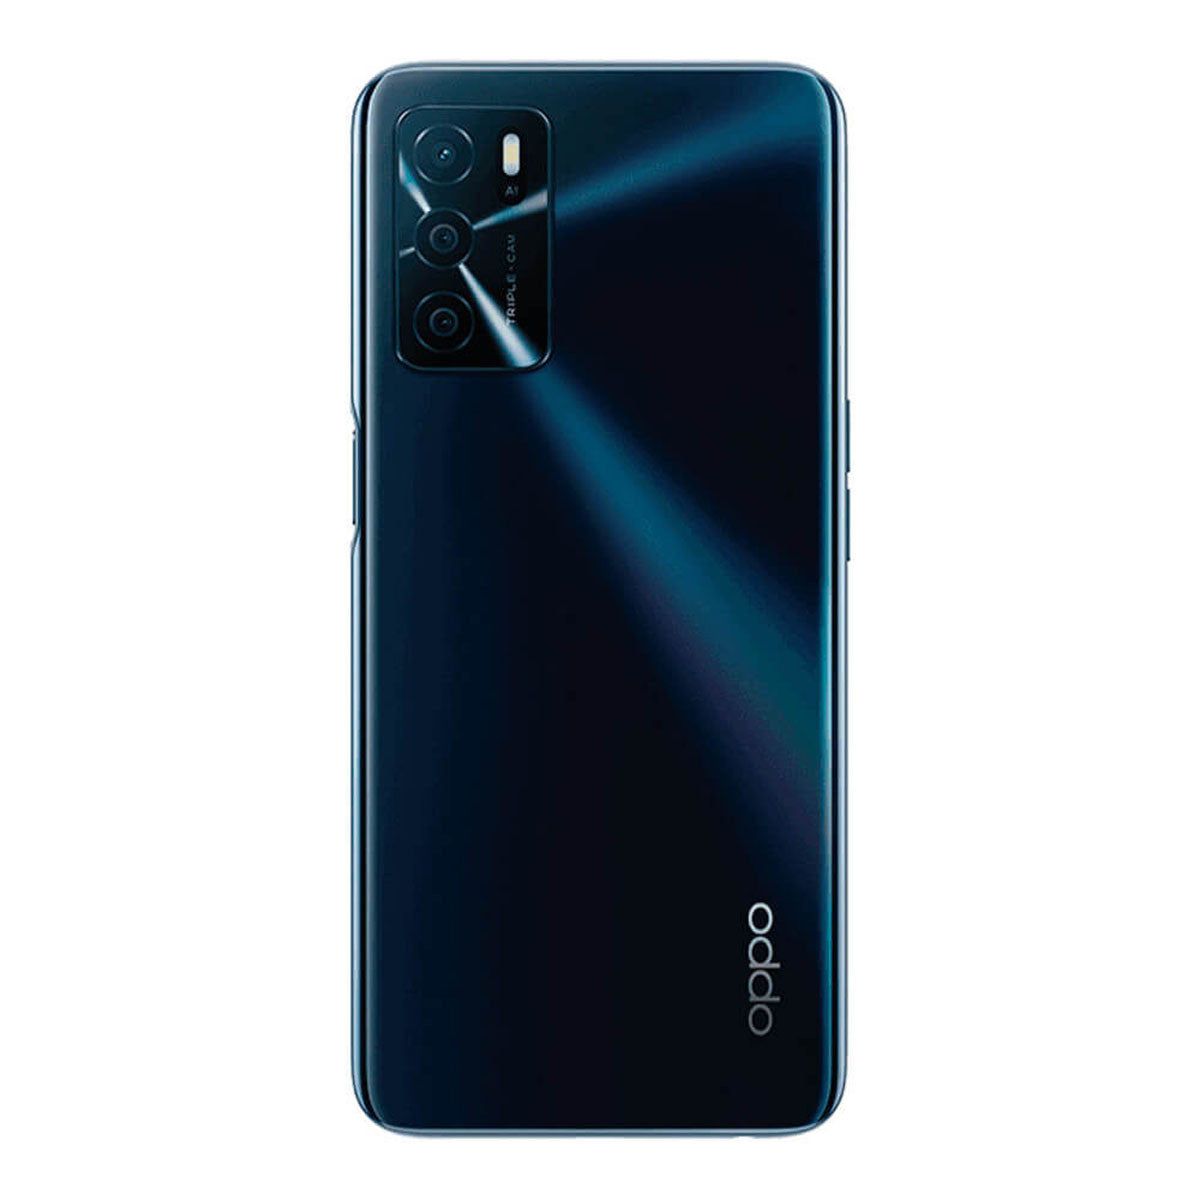 Oppo A54s 4GB/128GB Negro (Crystal Black) Dual SIM CPH2273 Smartphone | Oppo